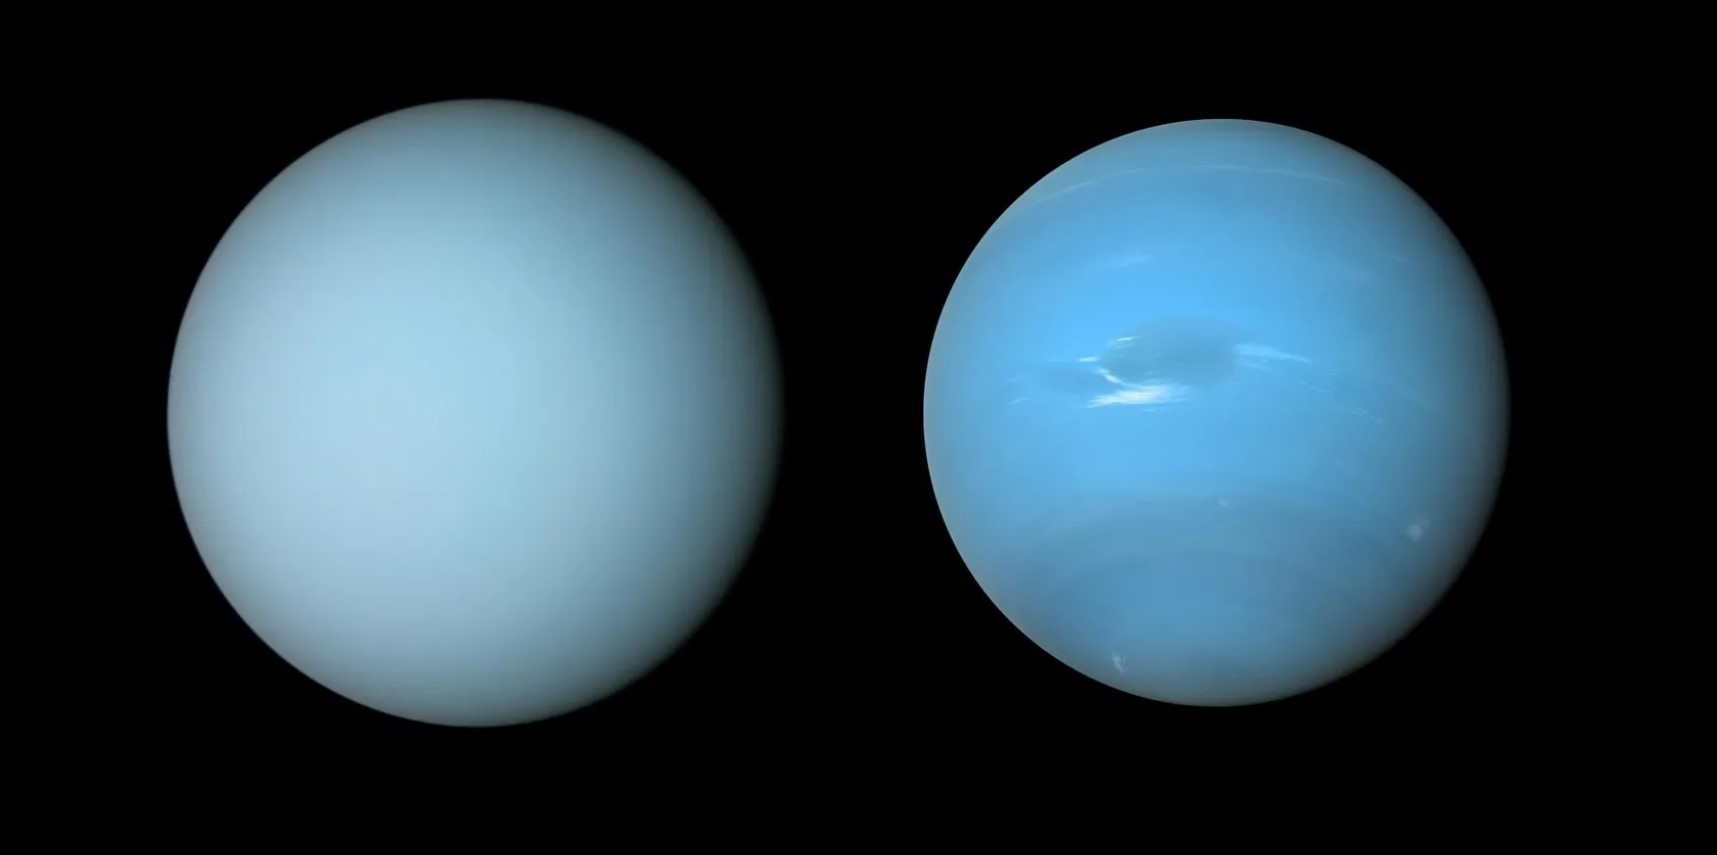 The colors of Neptune and Uranus